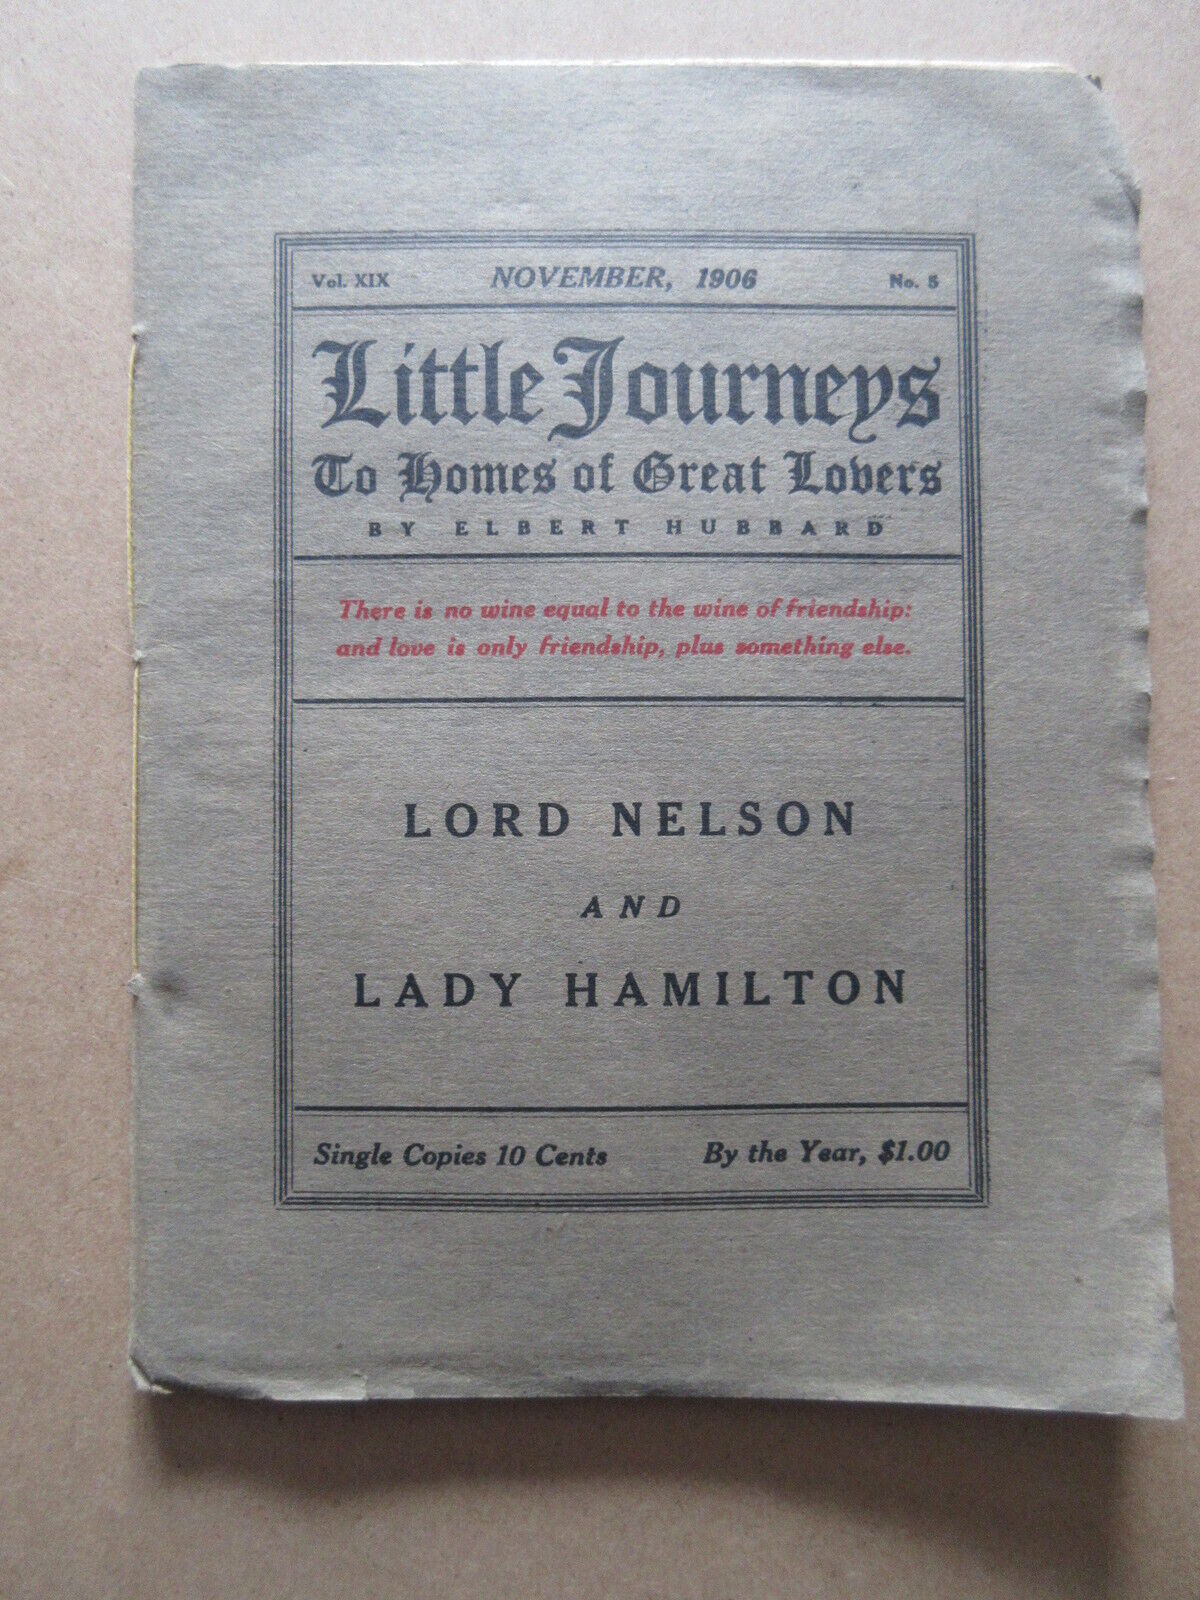 LITTLE JOURNEYS Nov. 1906 - Lord Nelson and Lady Hamilton  - ELBERT HUBBARD